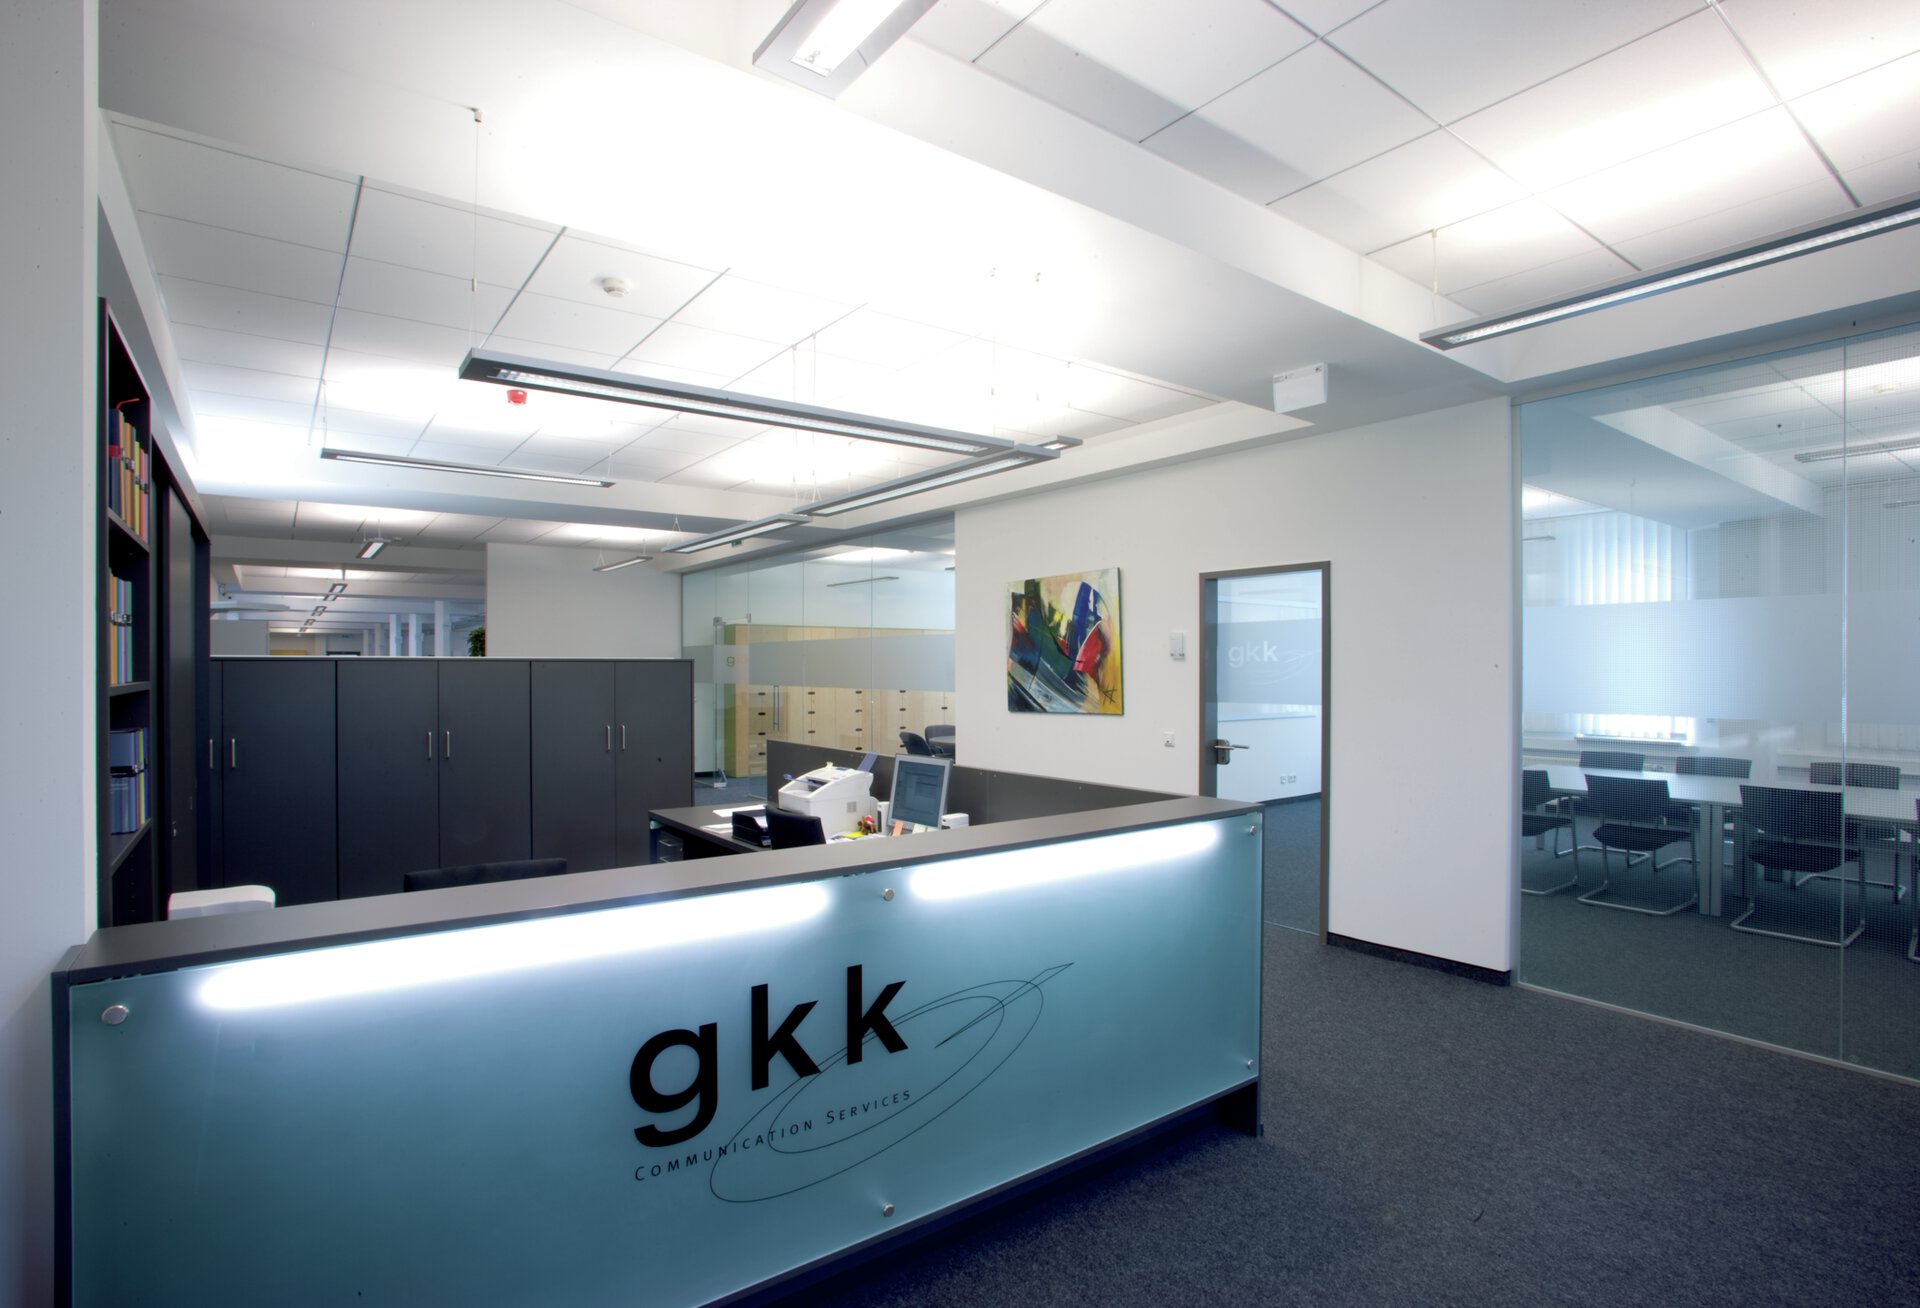 gkk Communication Service GmbH